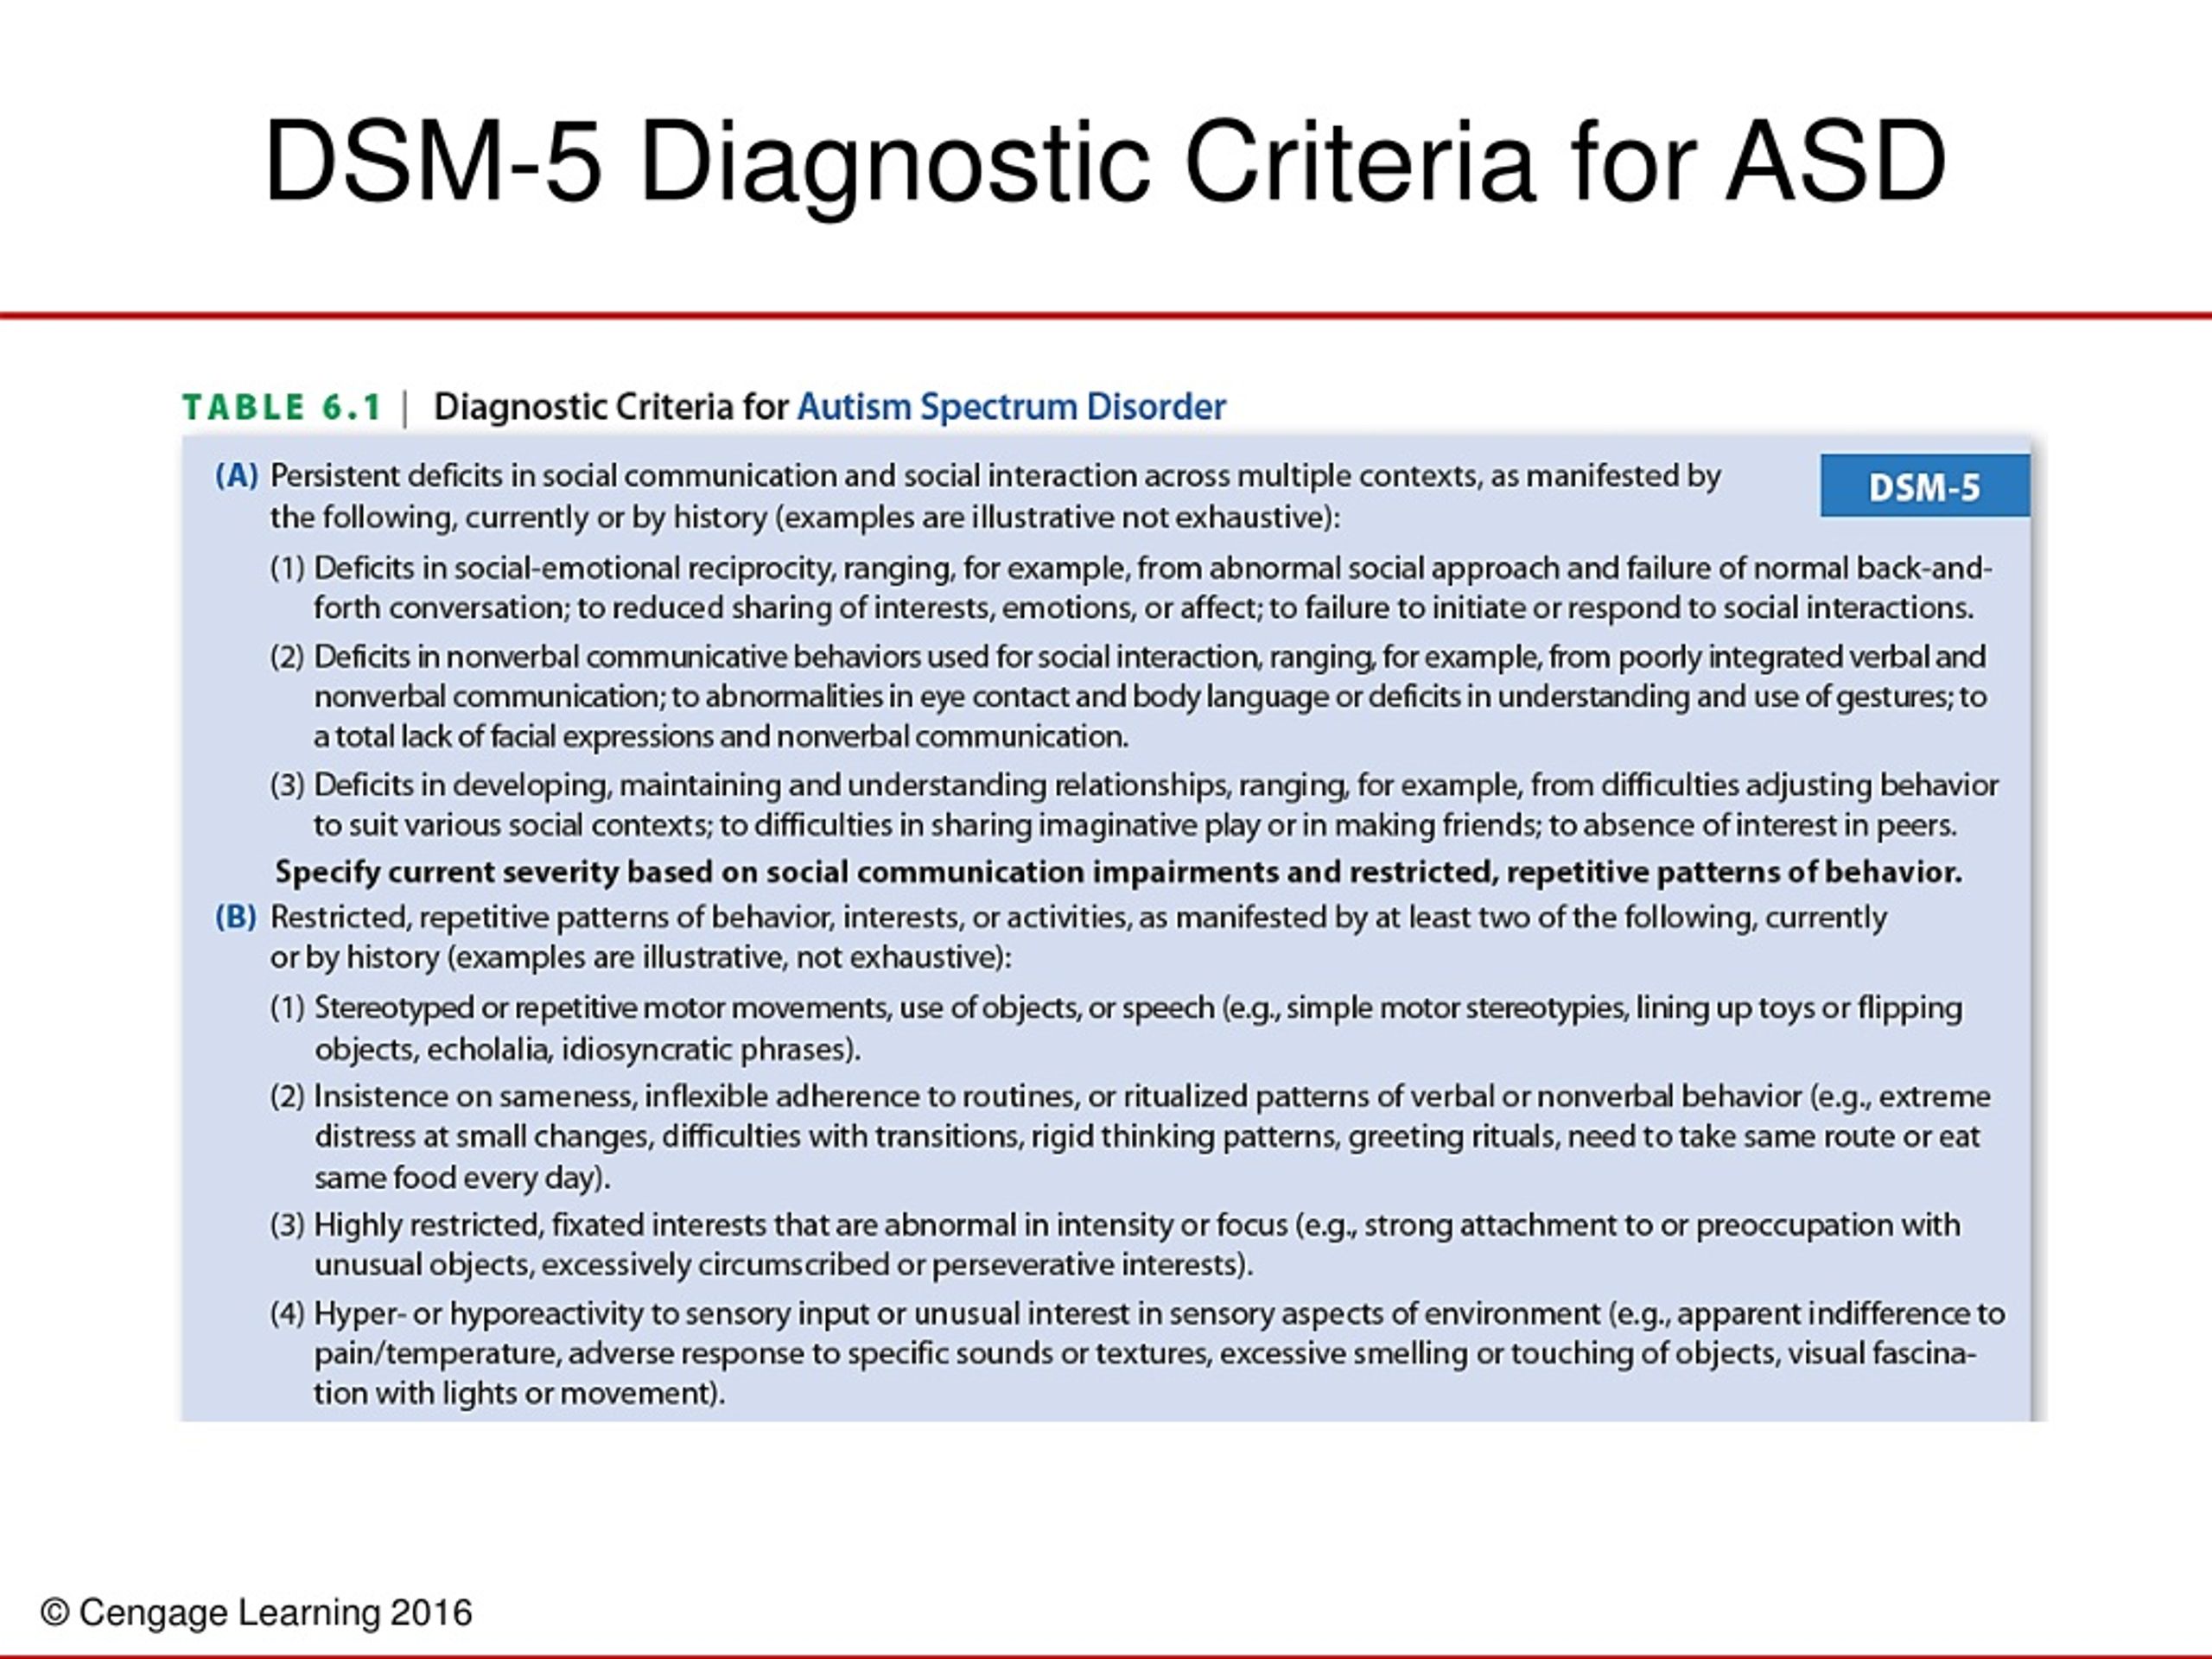 dsm 5 symptoms of asd